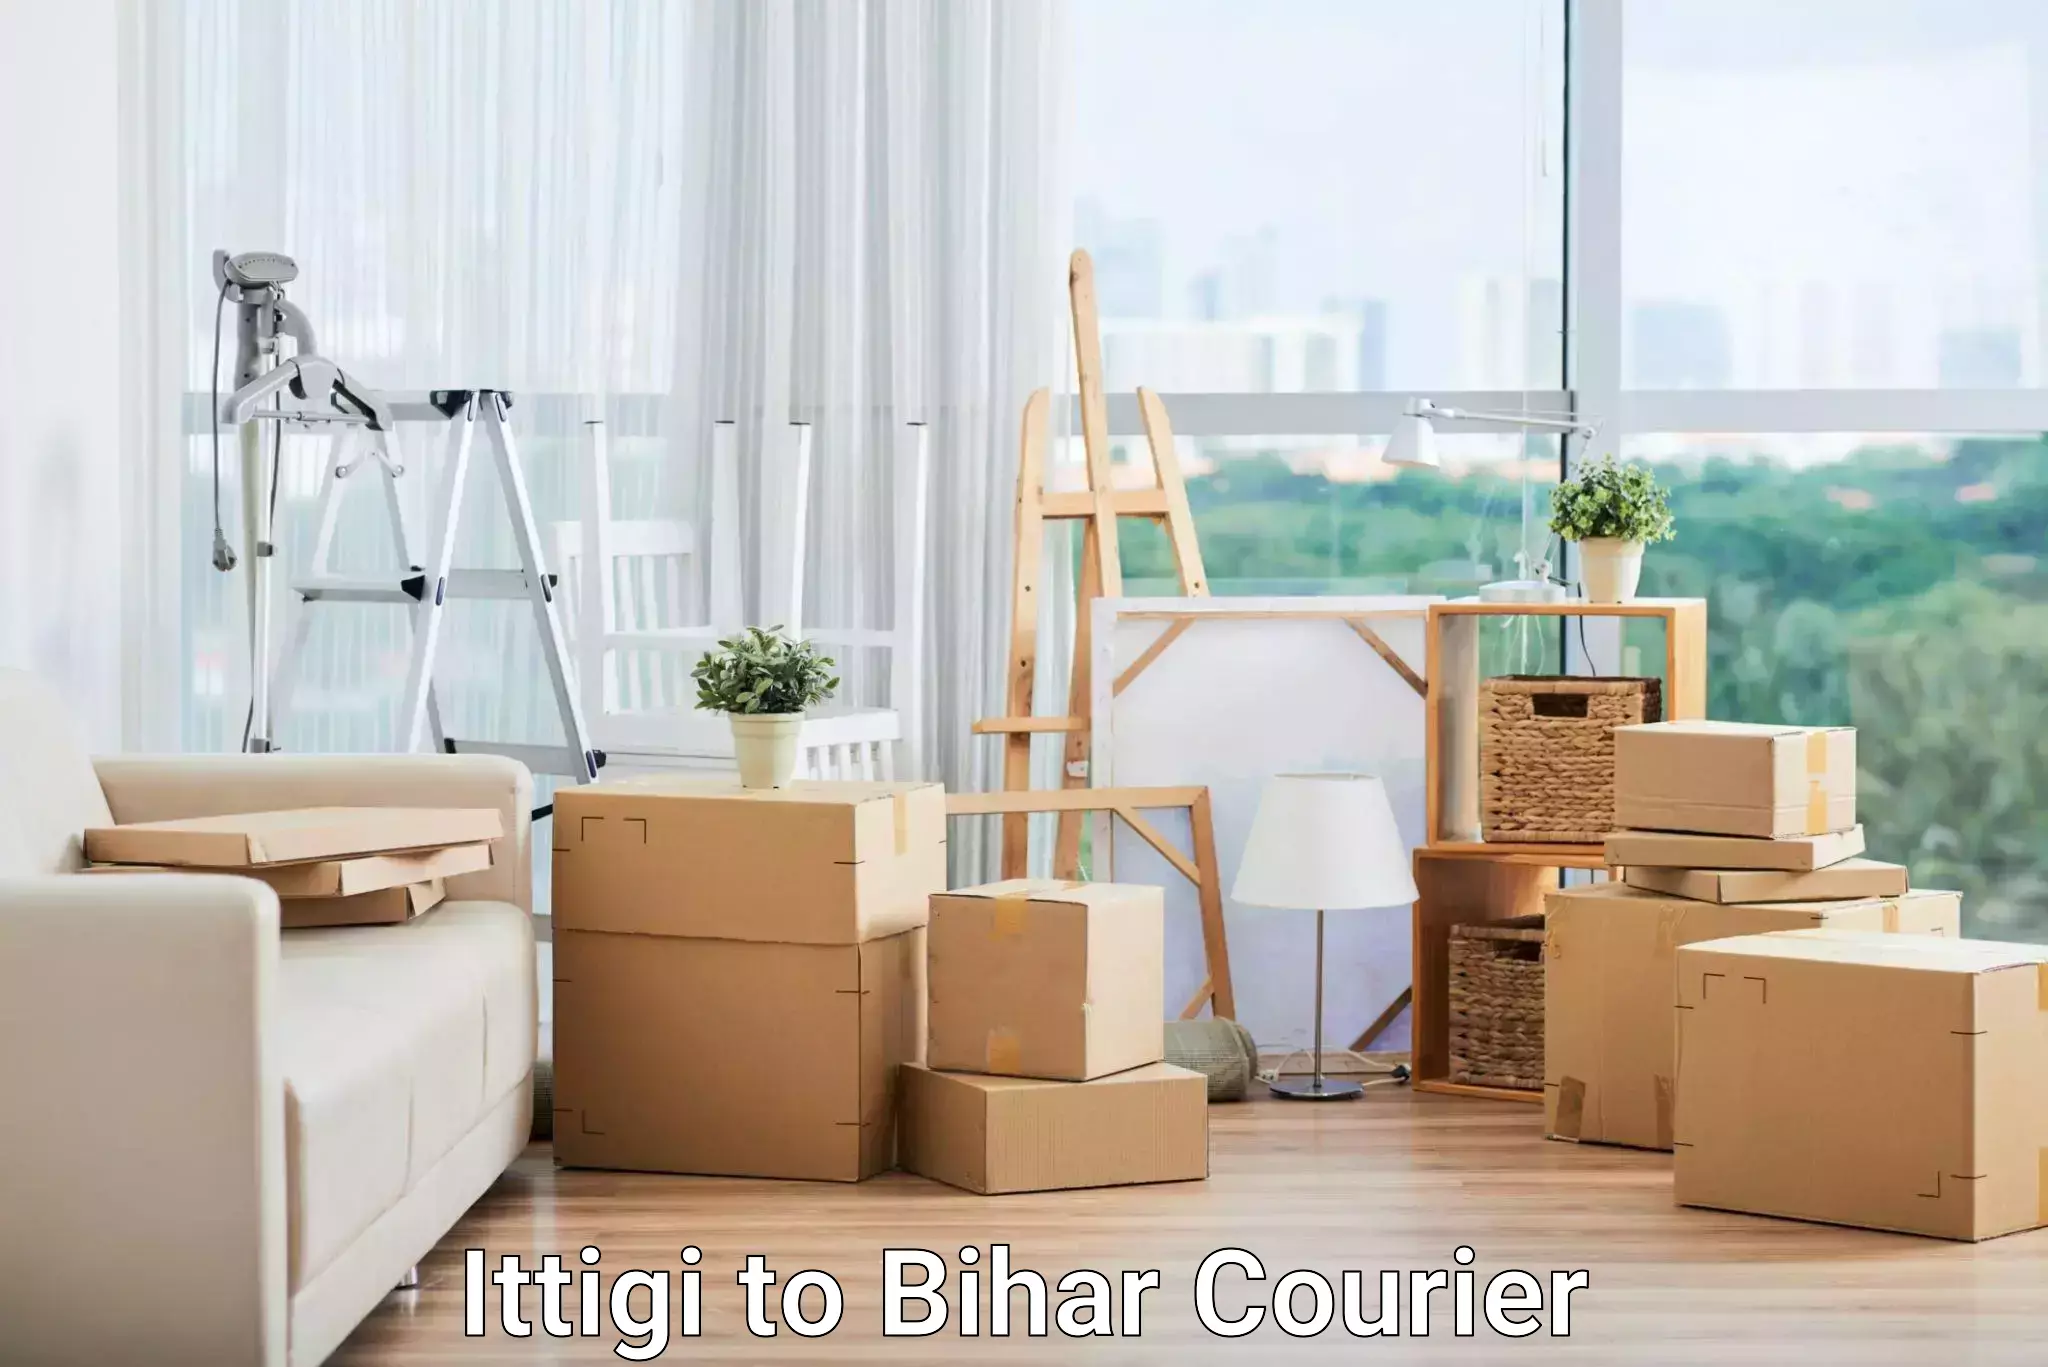 Cargo delivery service Ittigi to Fatwah